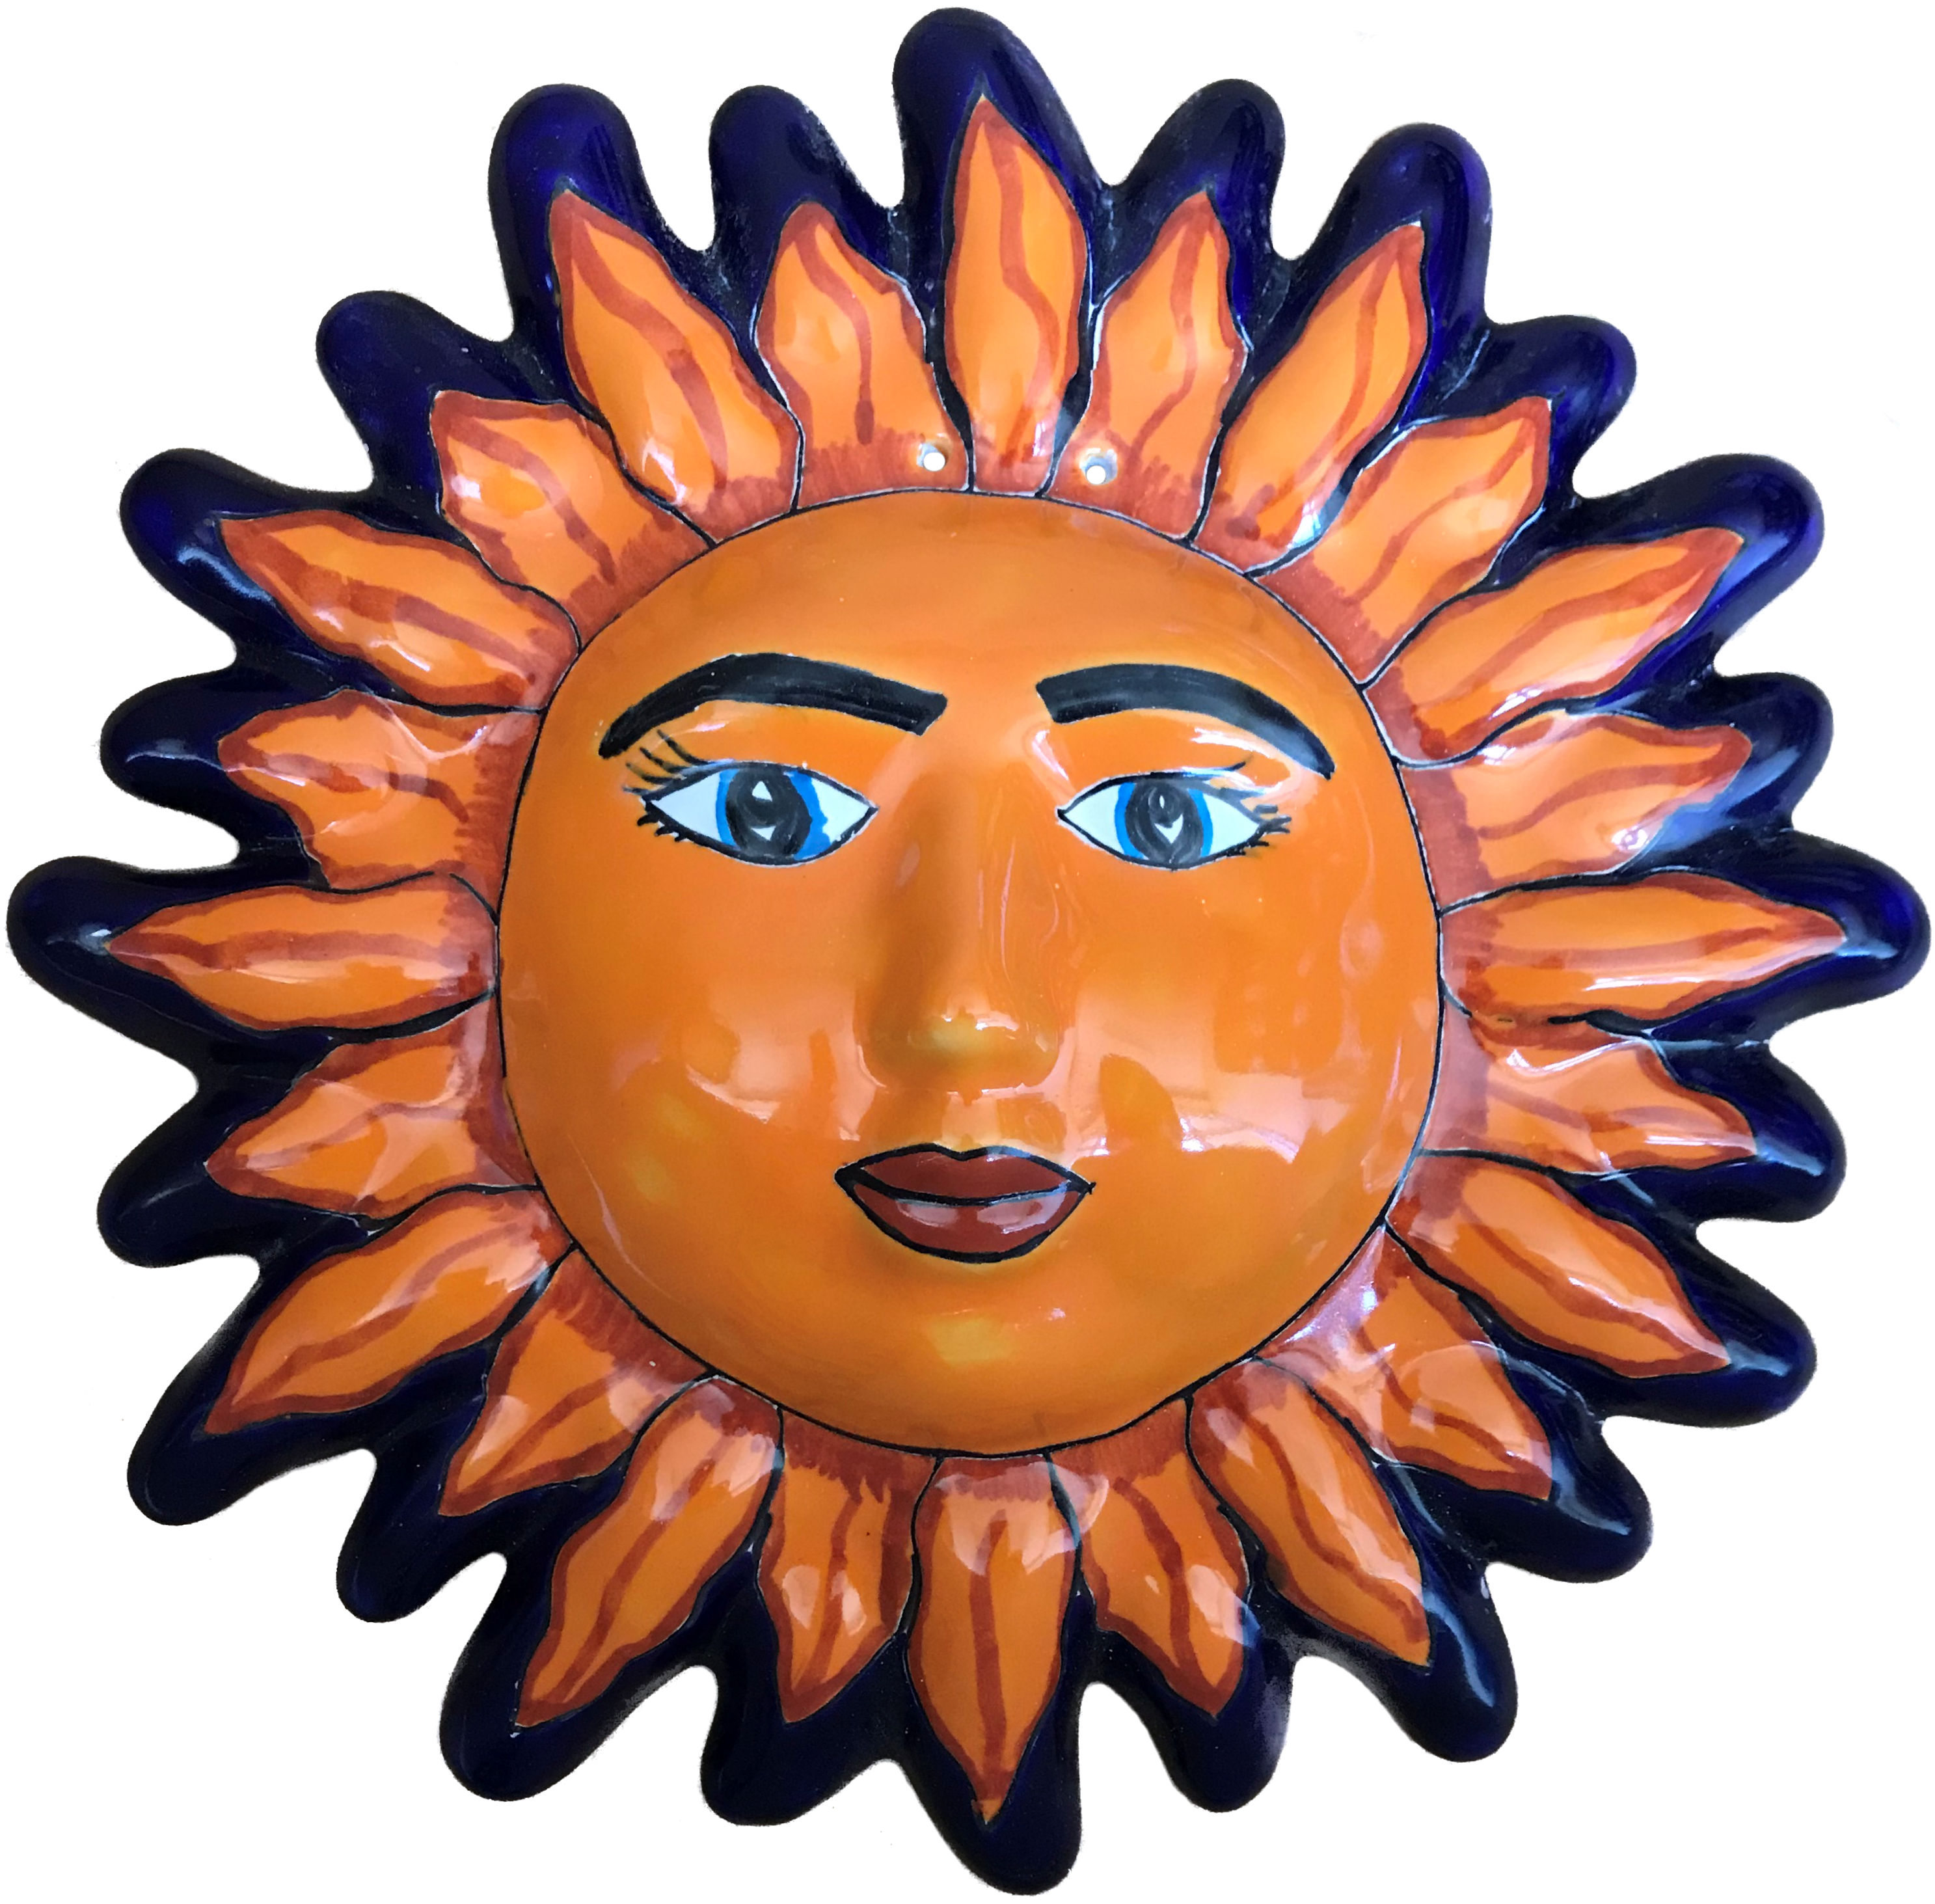 Medium-Sized Talavera Ceramic Sun Face